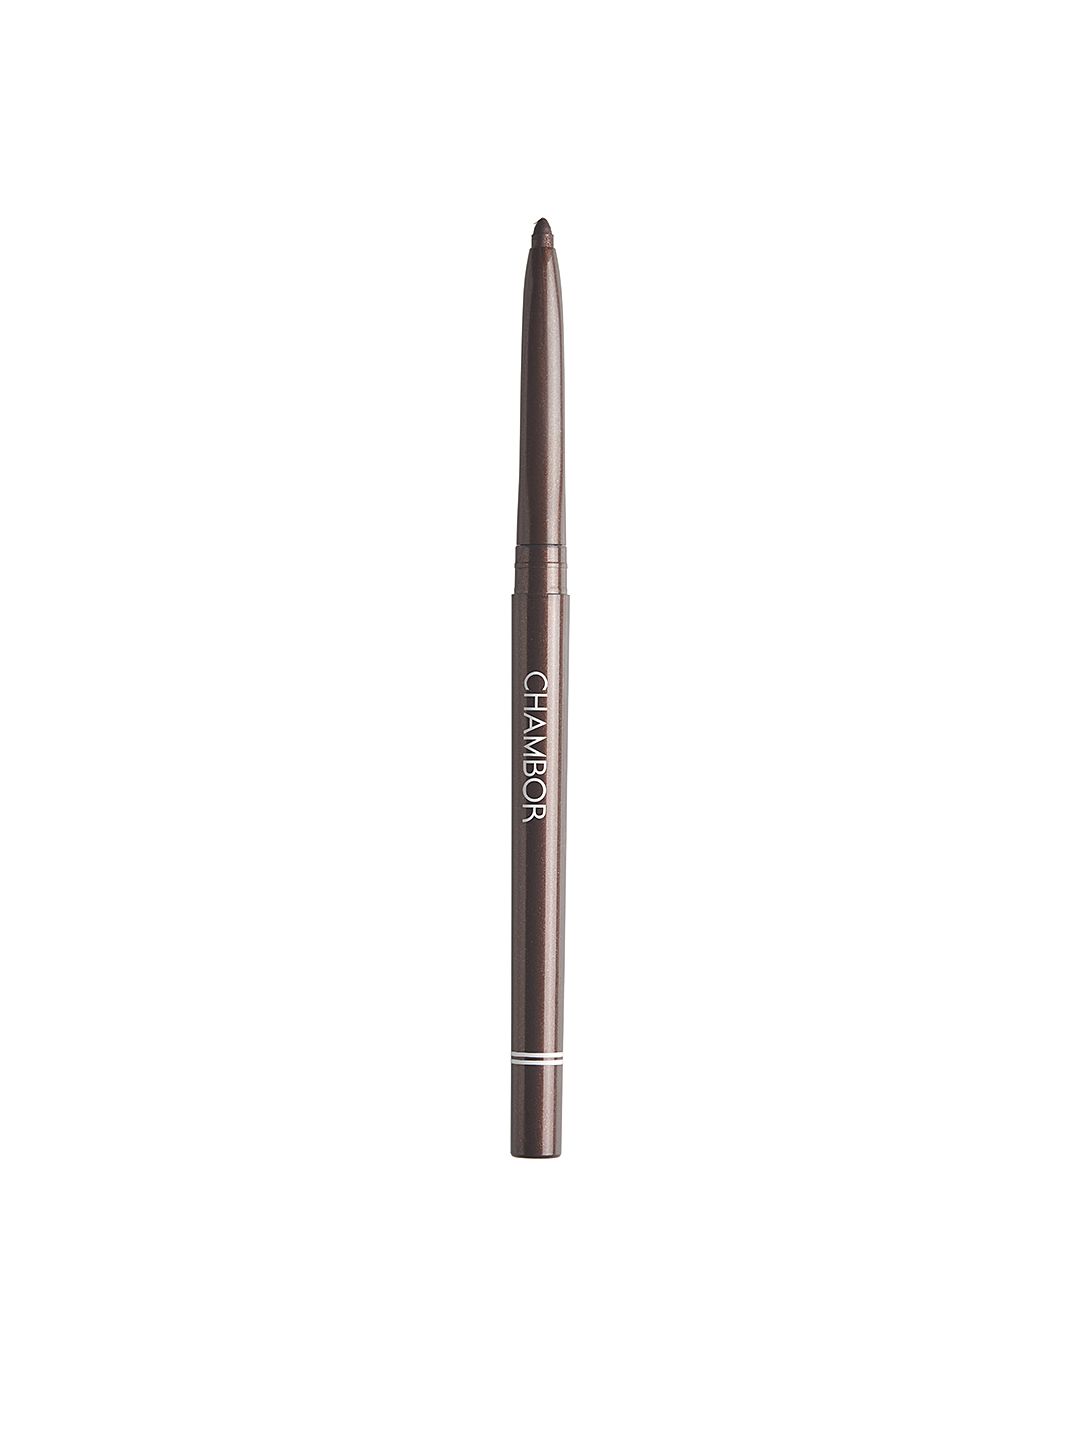 Chambor Intense Definition Dark Brown Gel Eyeliner Pencil 102 Price in India